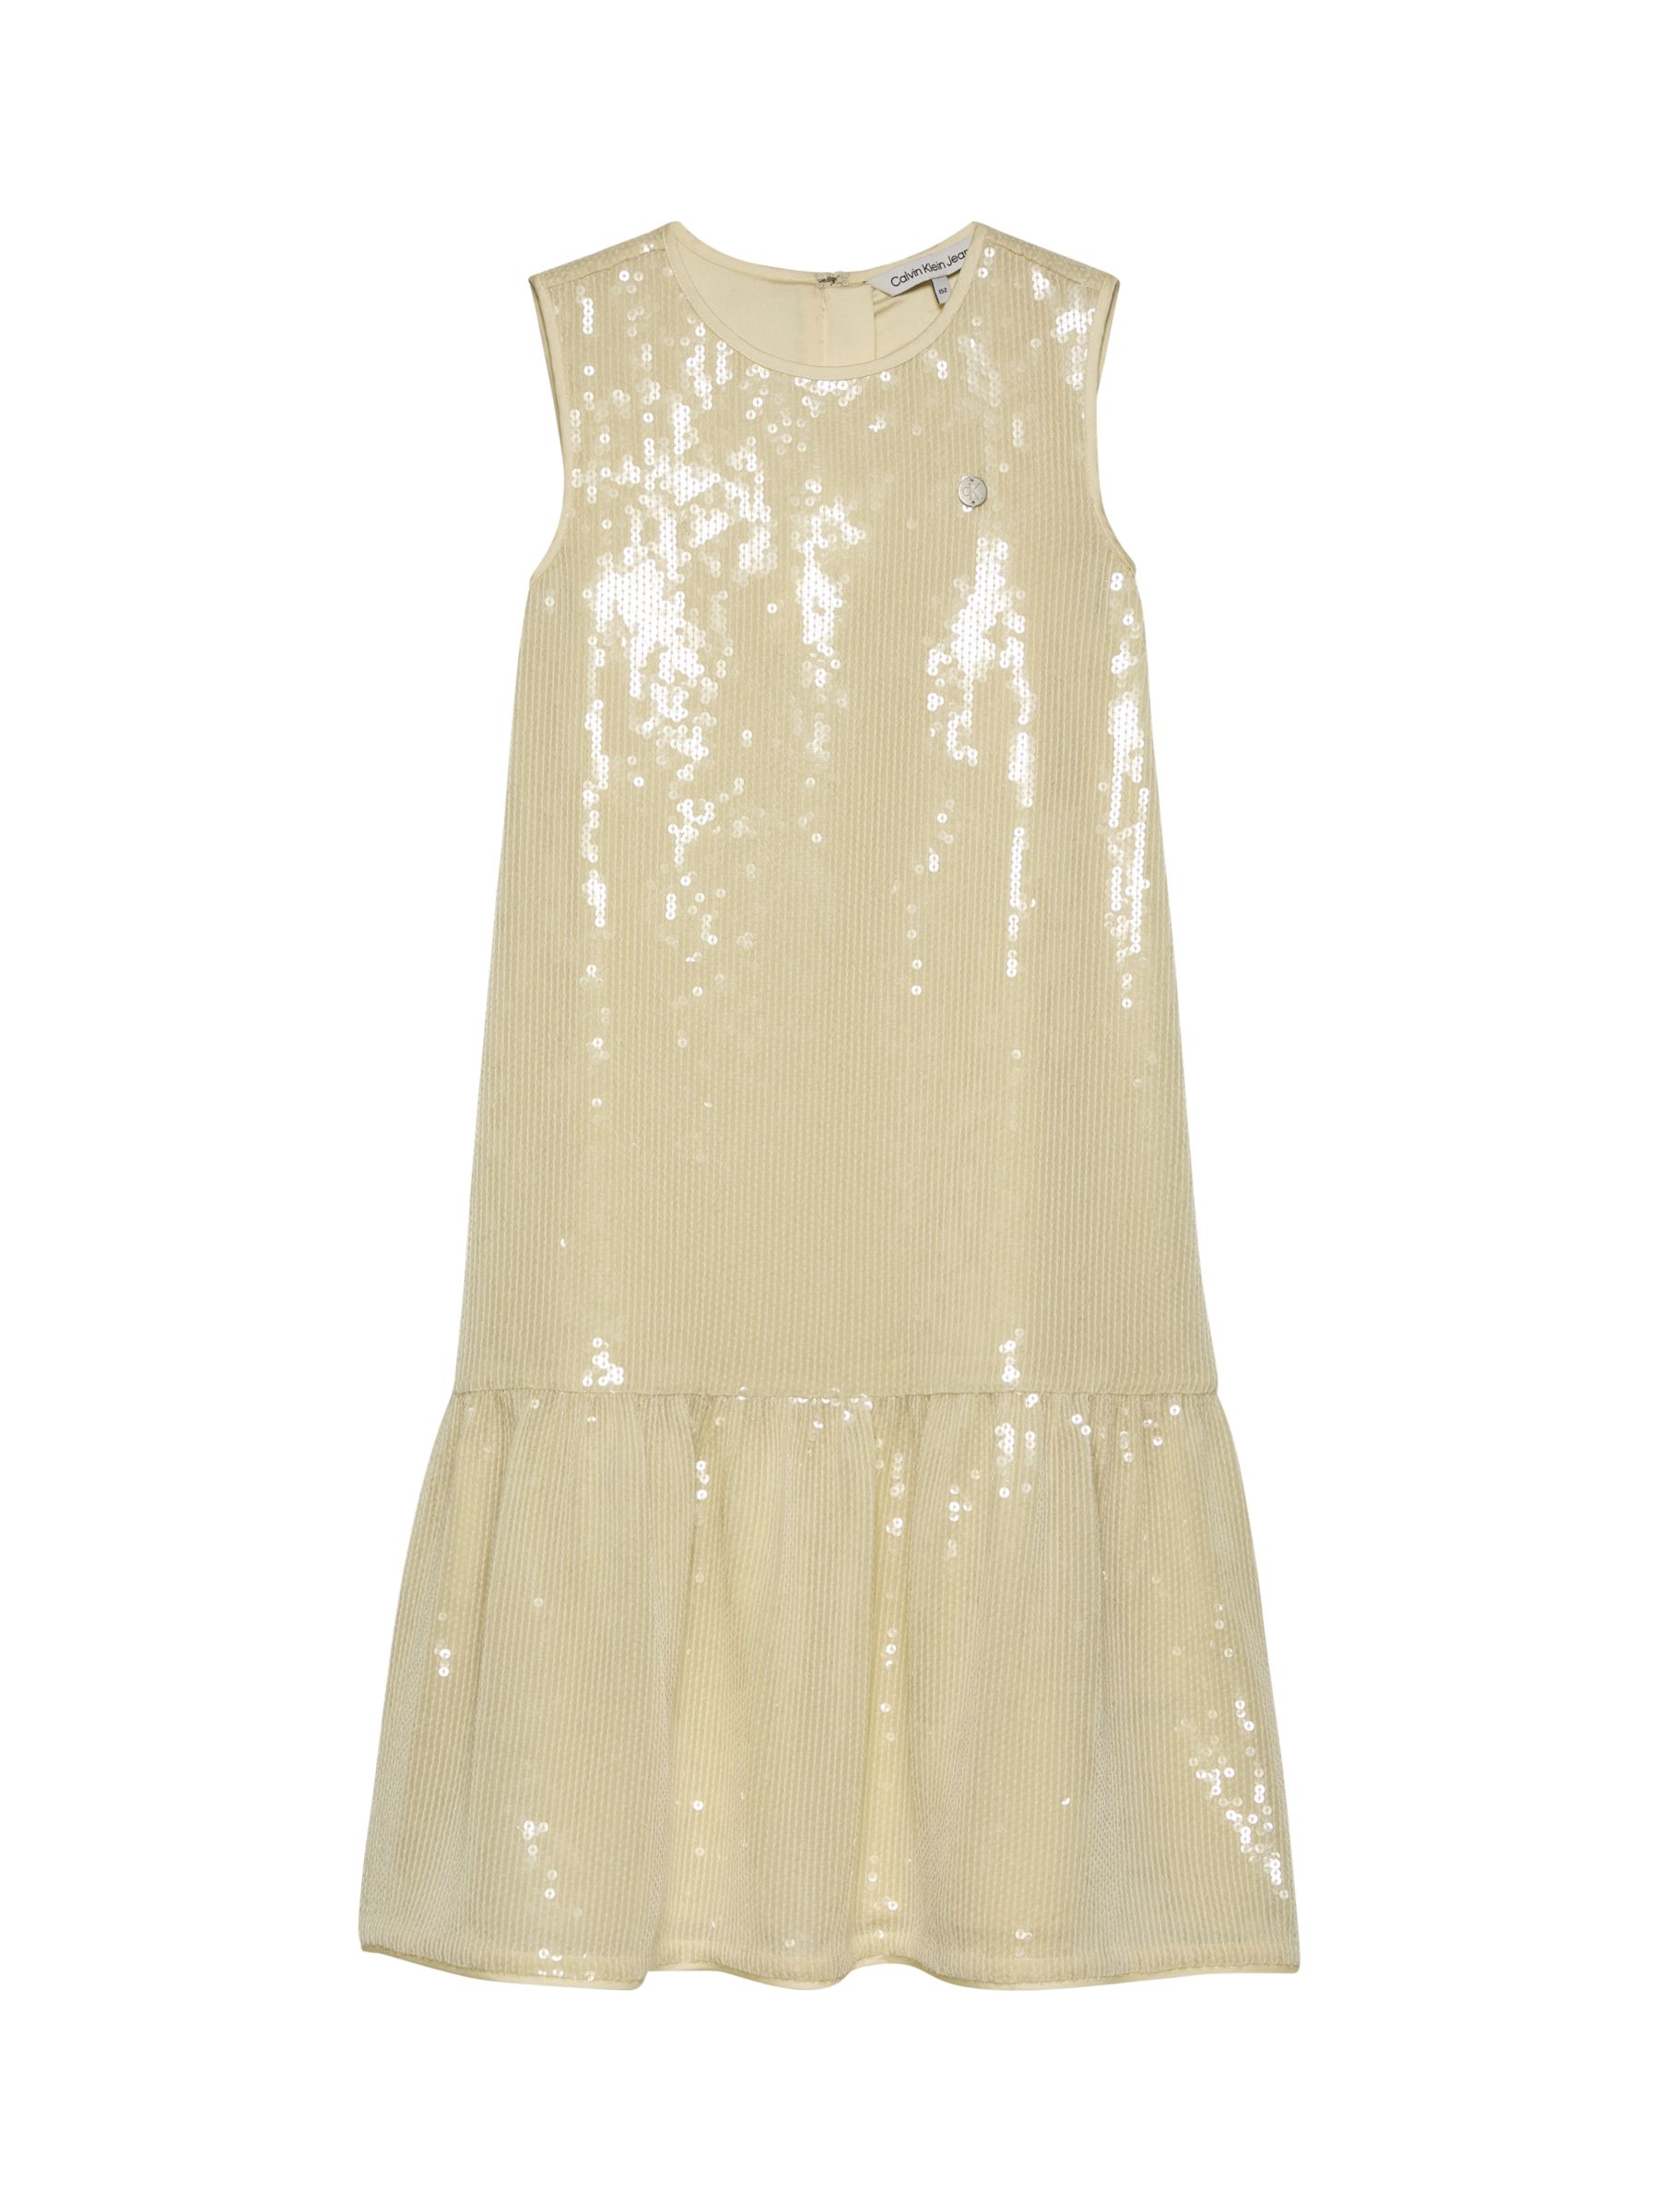 Calvin Klein Kids' Festive Sequin Flare Dress, Vanilla